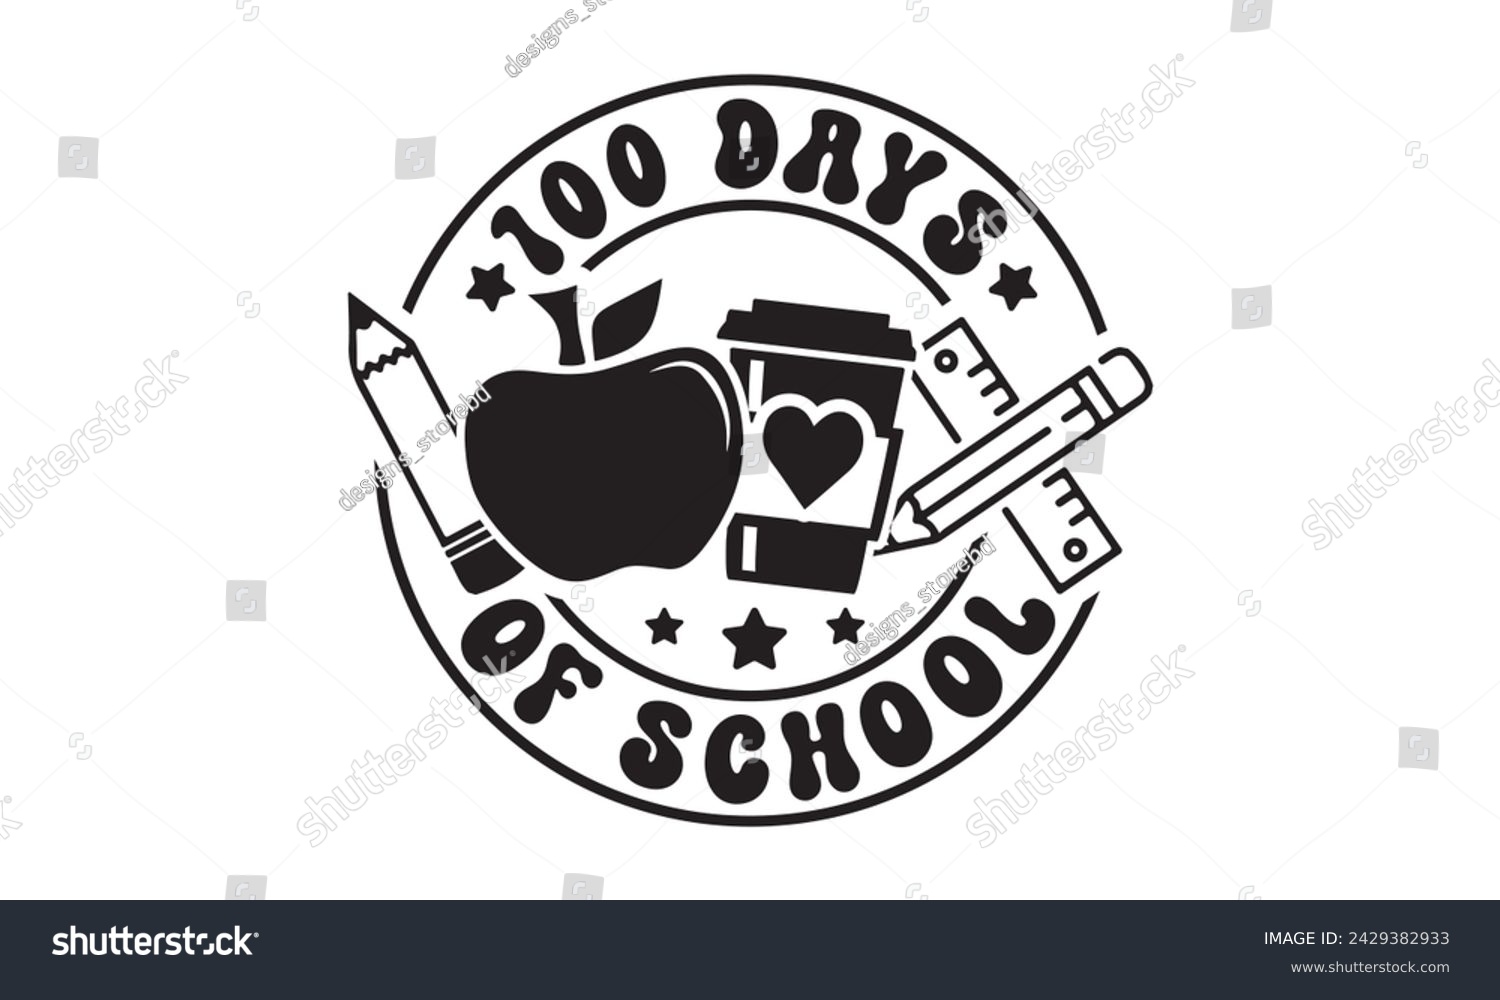 SVG of 100 days of school,100 Days of school svg,Teacher svg,t-shirt design,Retro 100 Days svg,funny 100 Days Of School svg,Printable Vector Illustration,Cut Files Cricut,Silhouette,png,Laser cut svg